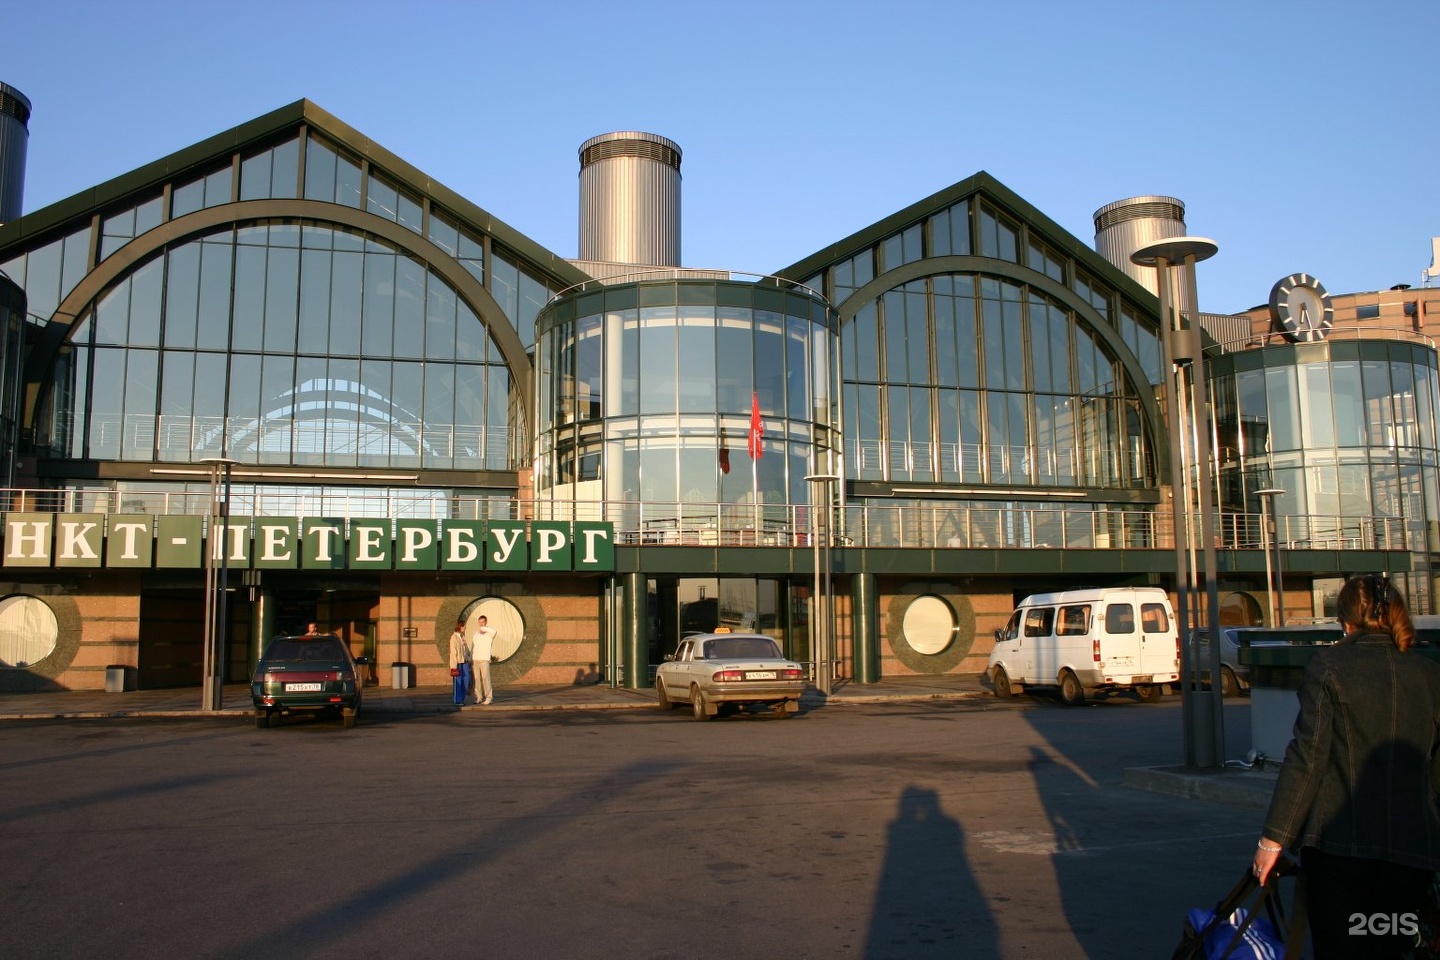 Ладожский вокзал Санкт-Петербург